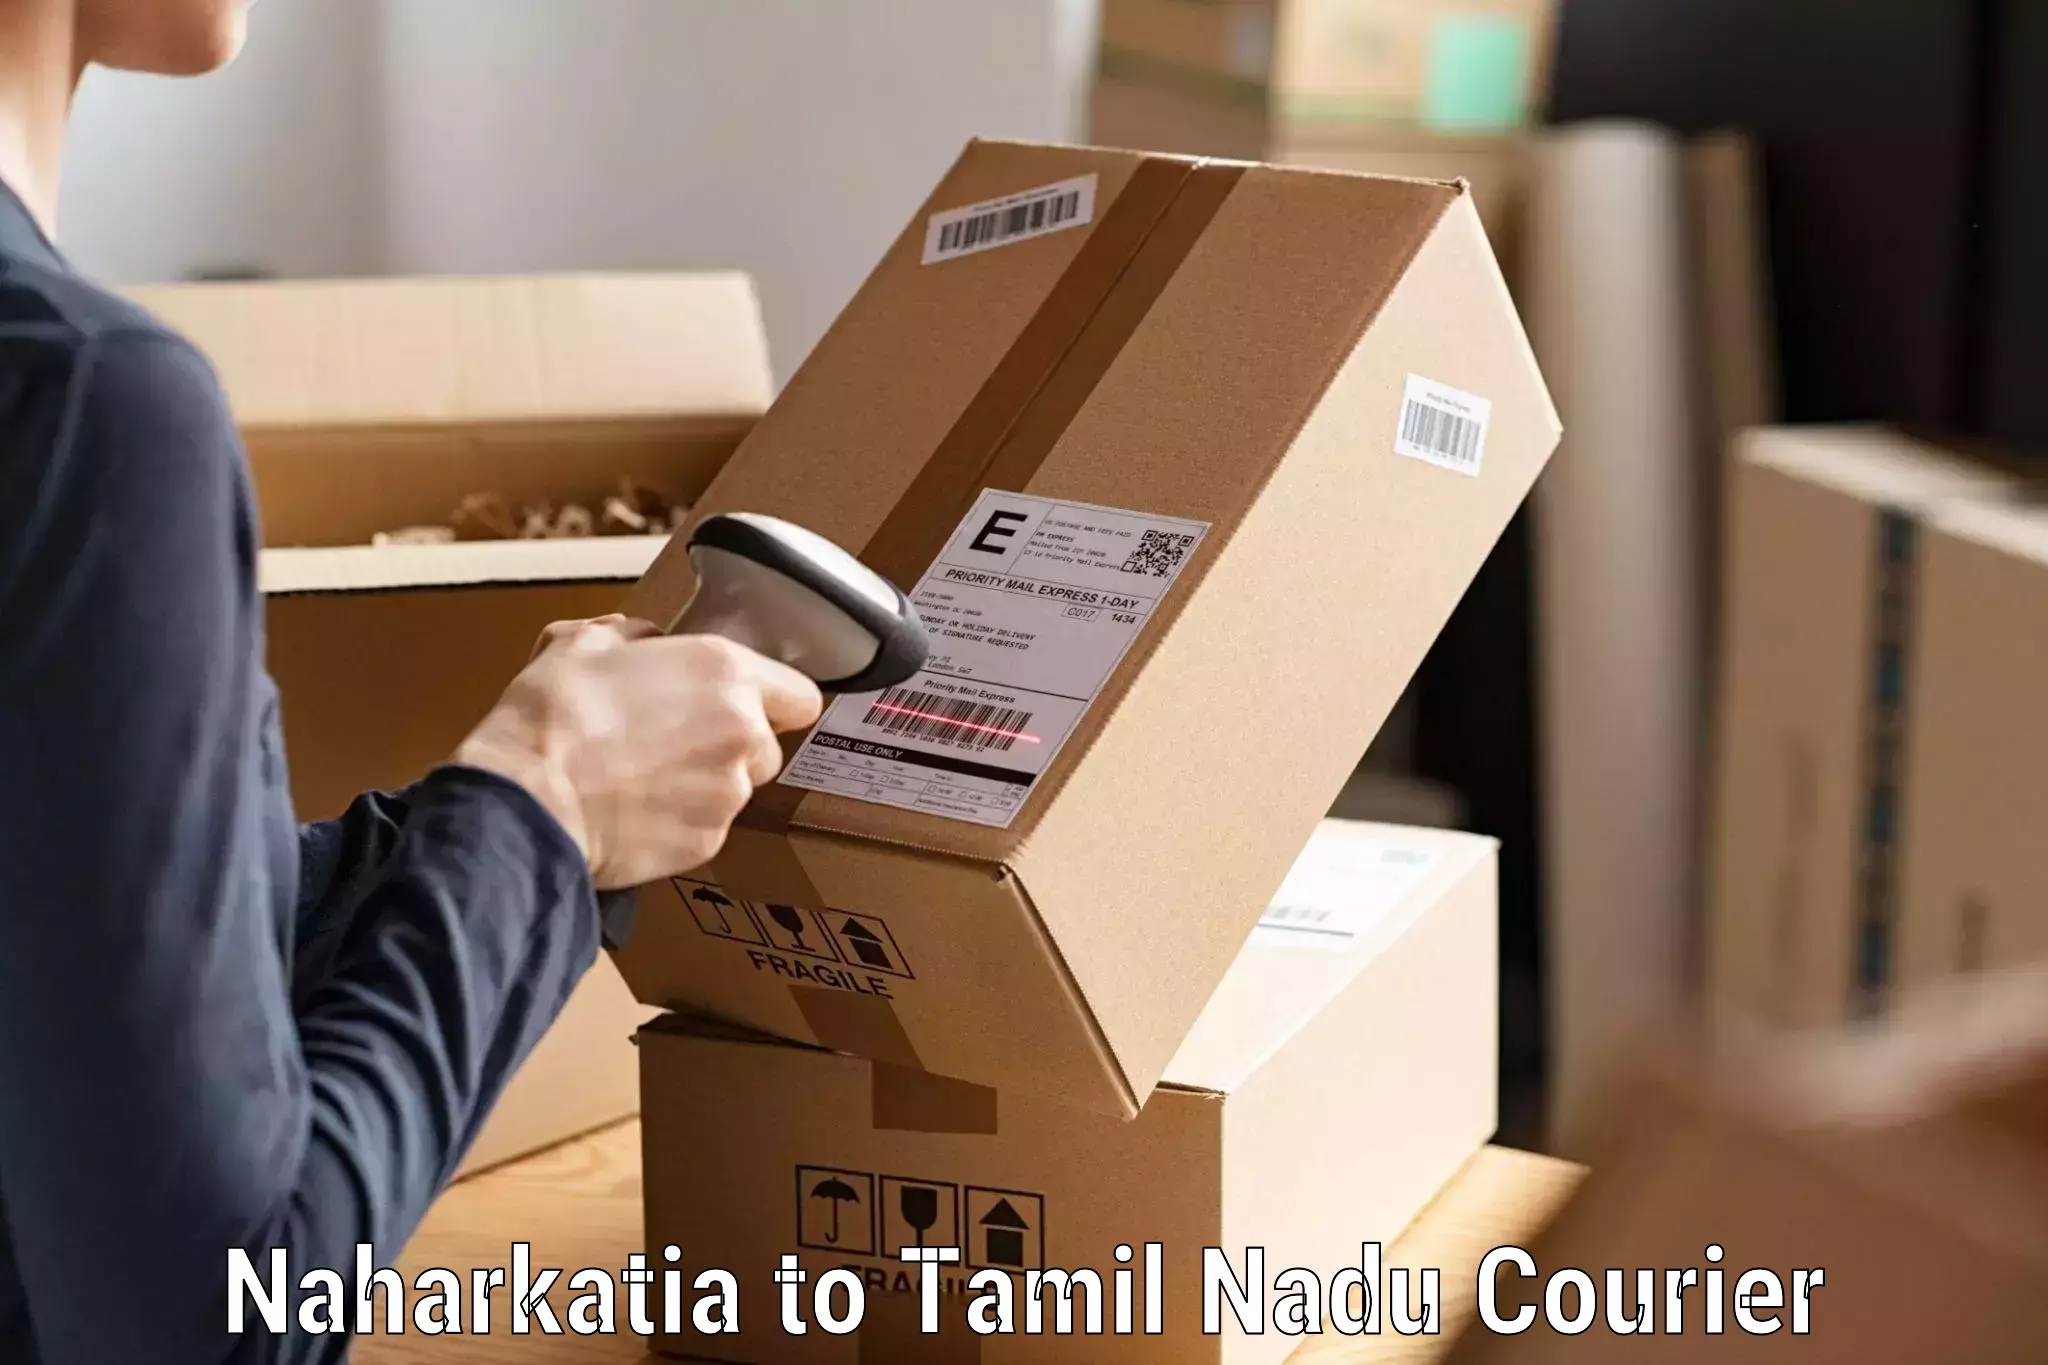 Global courier networks Naharkatia to Rathinasabapathy Puram